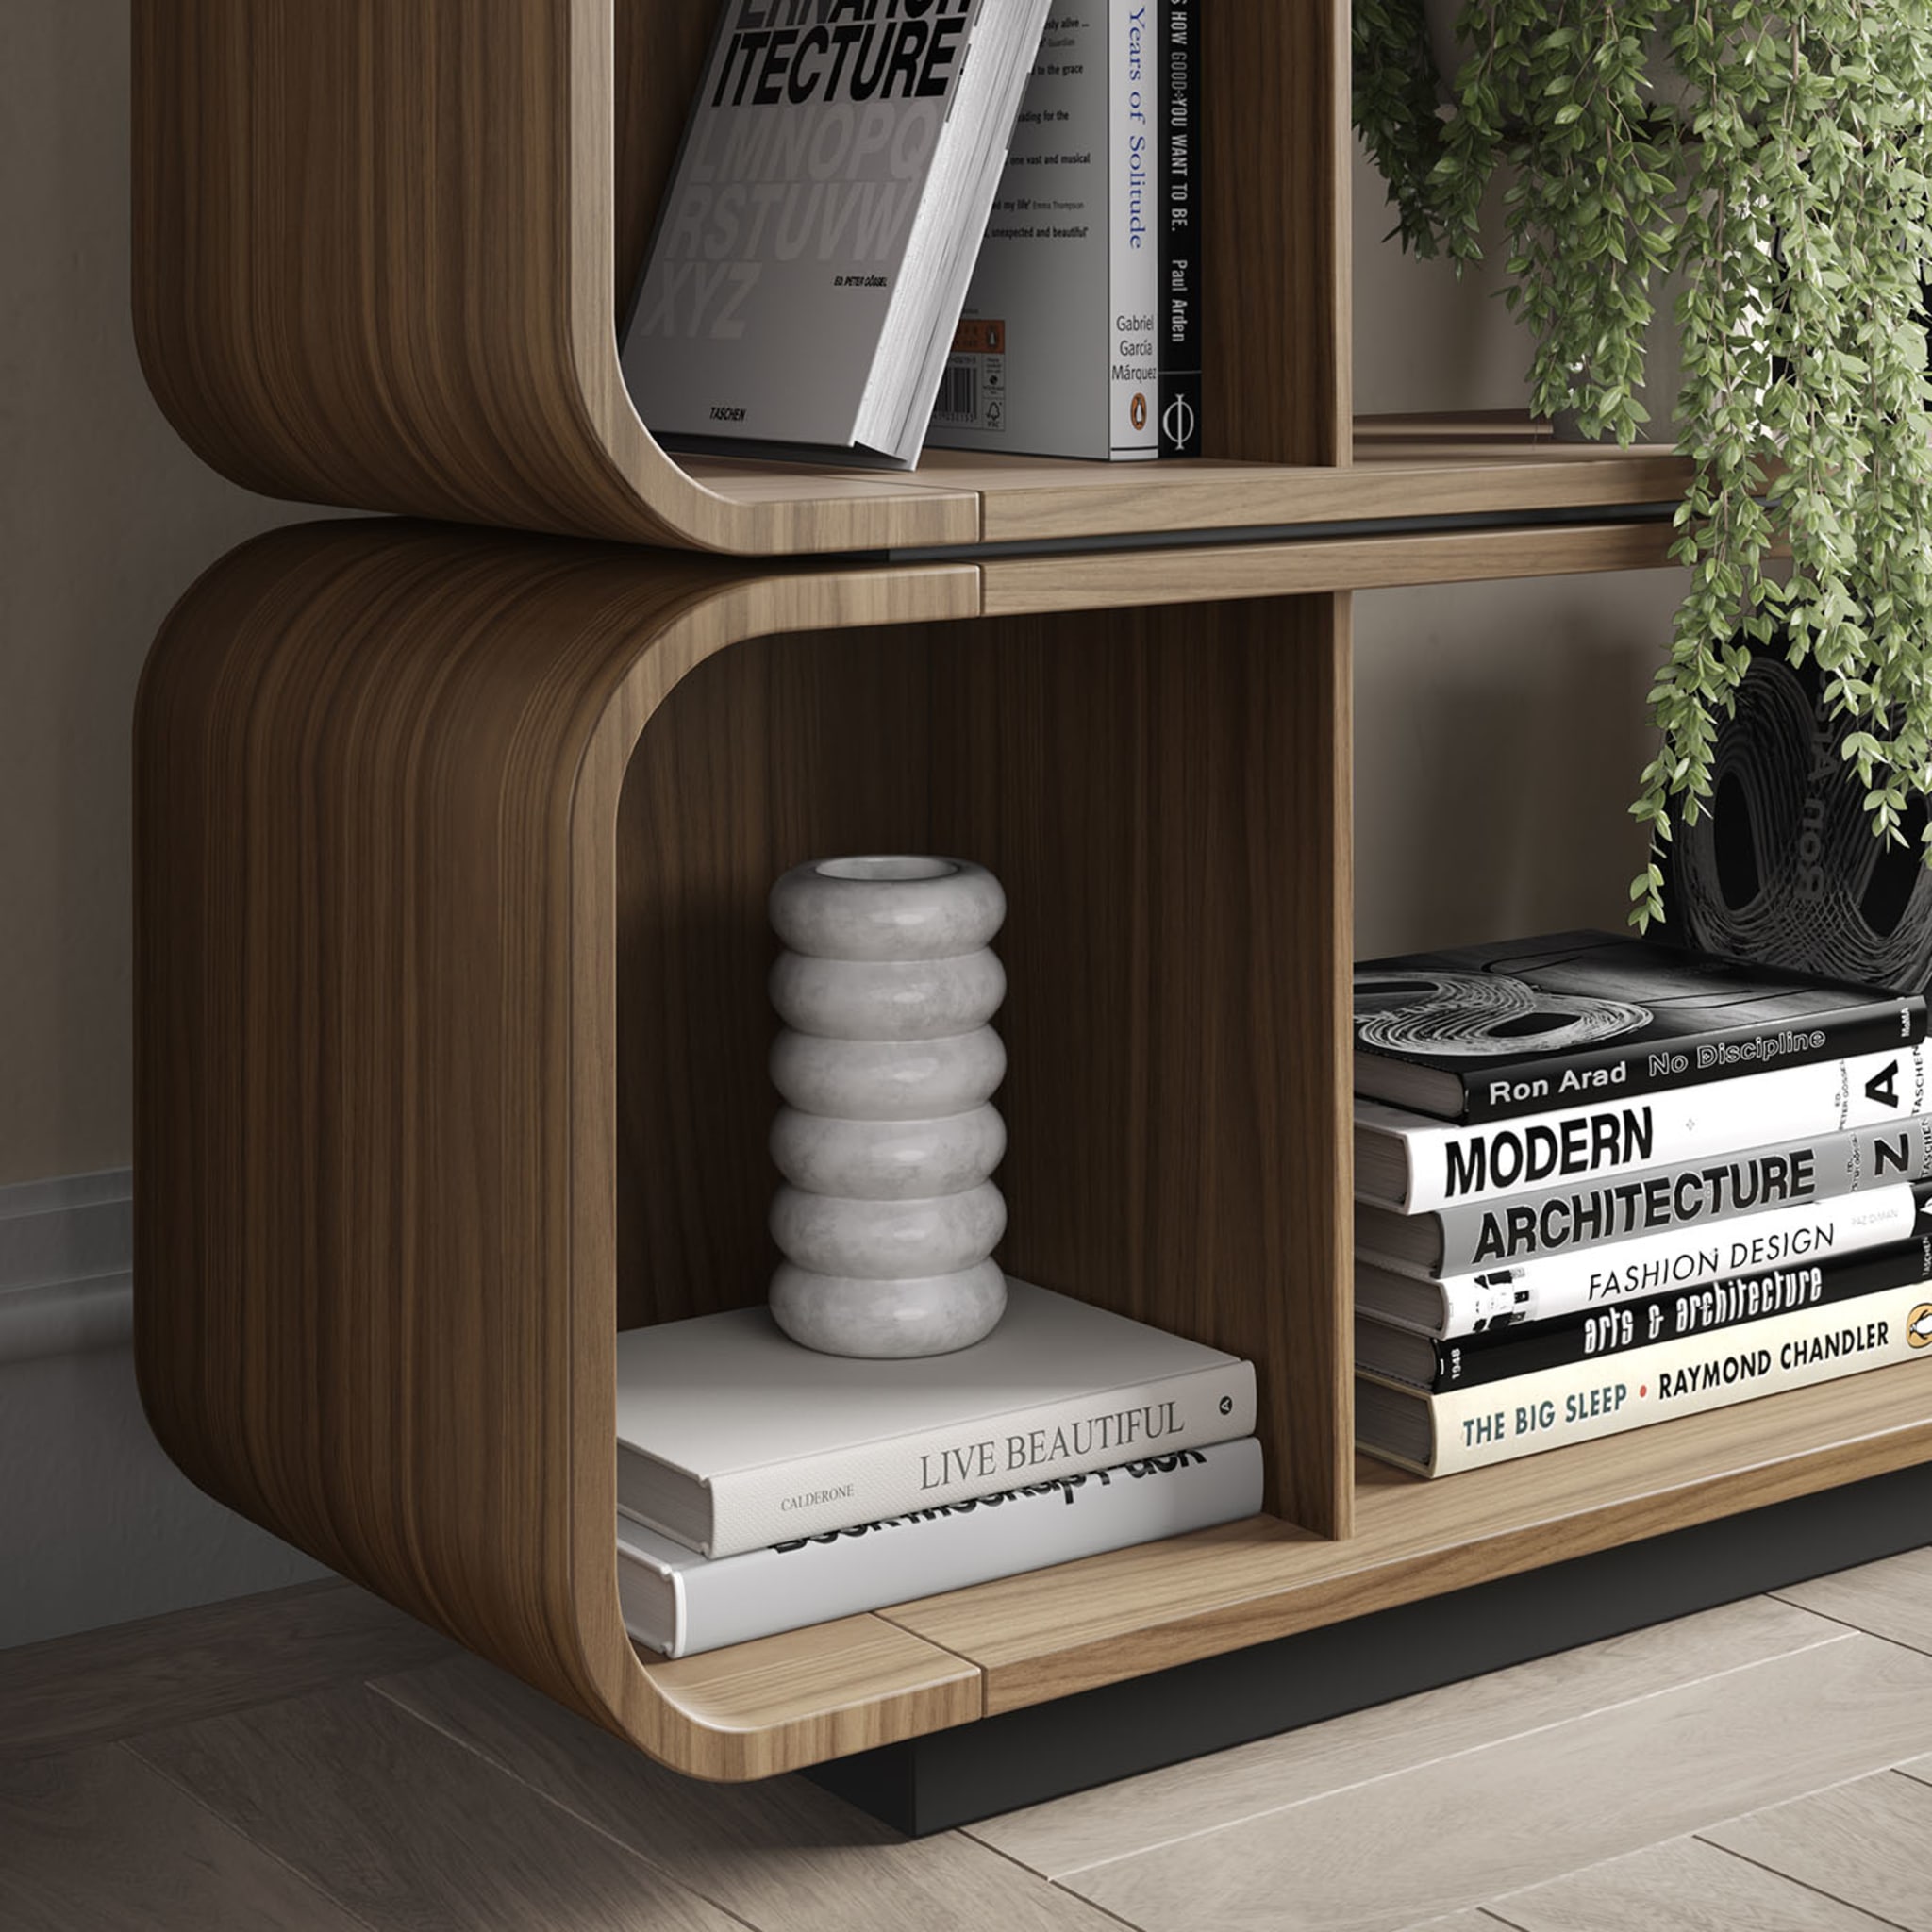 ROUND UP 180 Modular Bookshelves - Alternative view 2